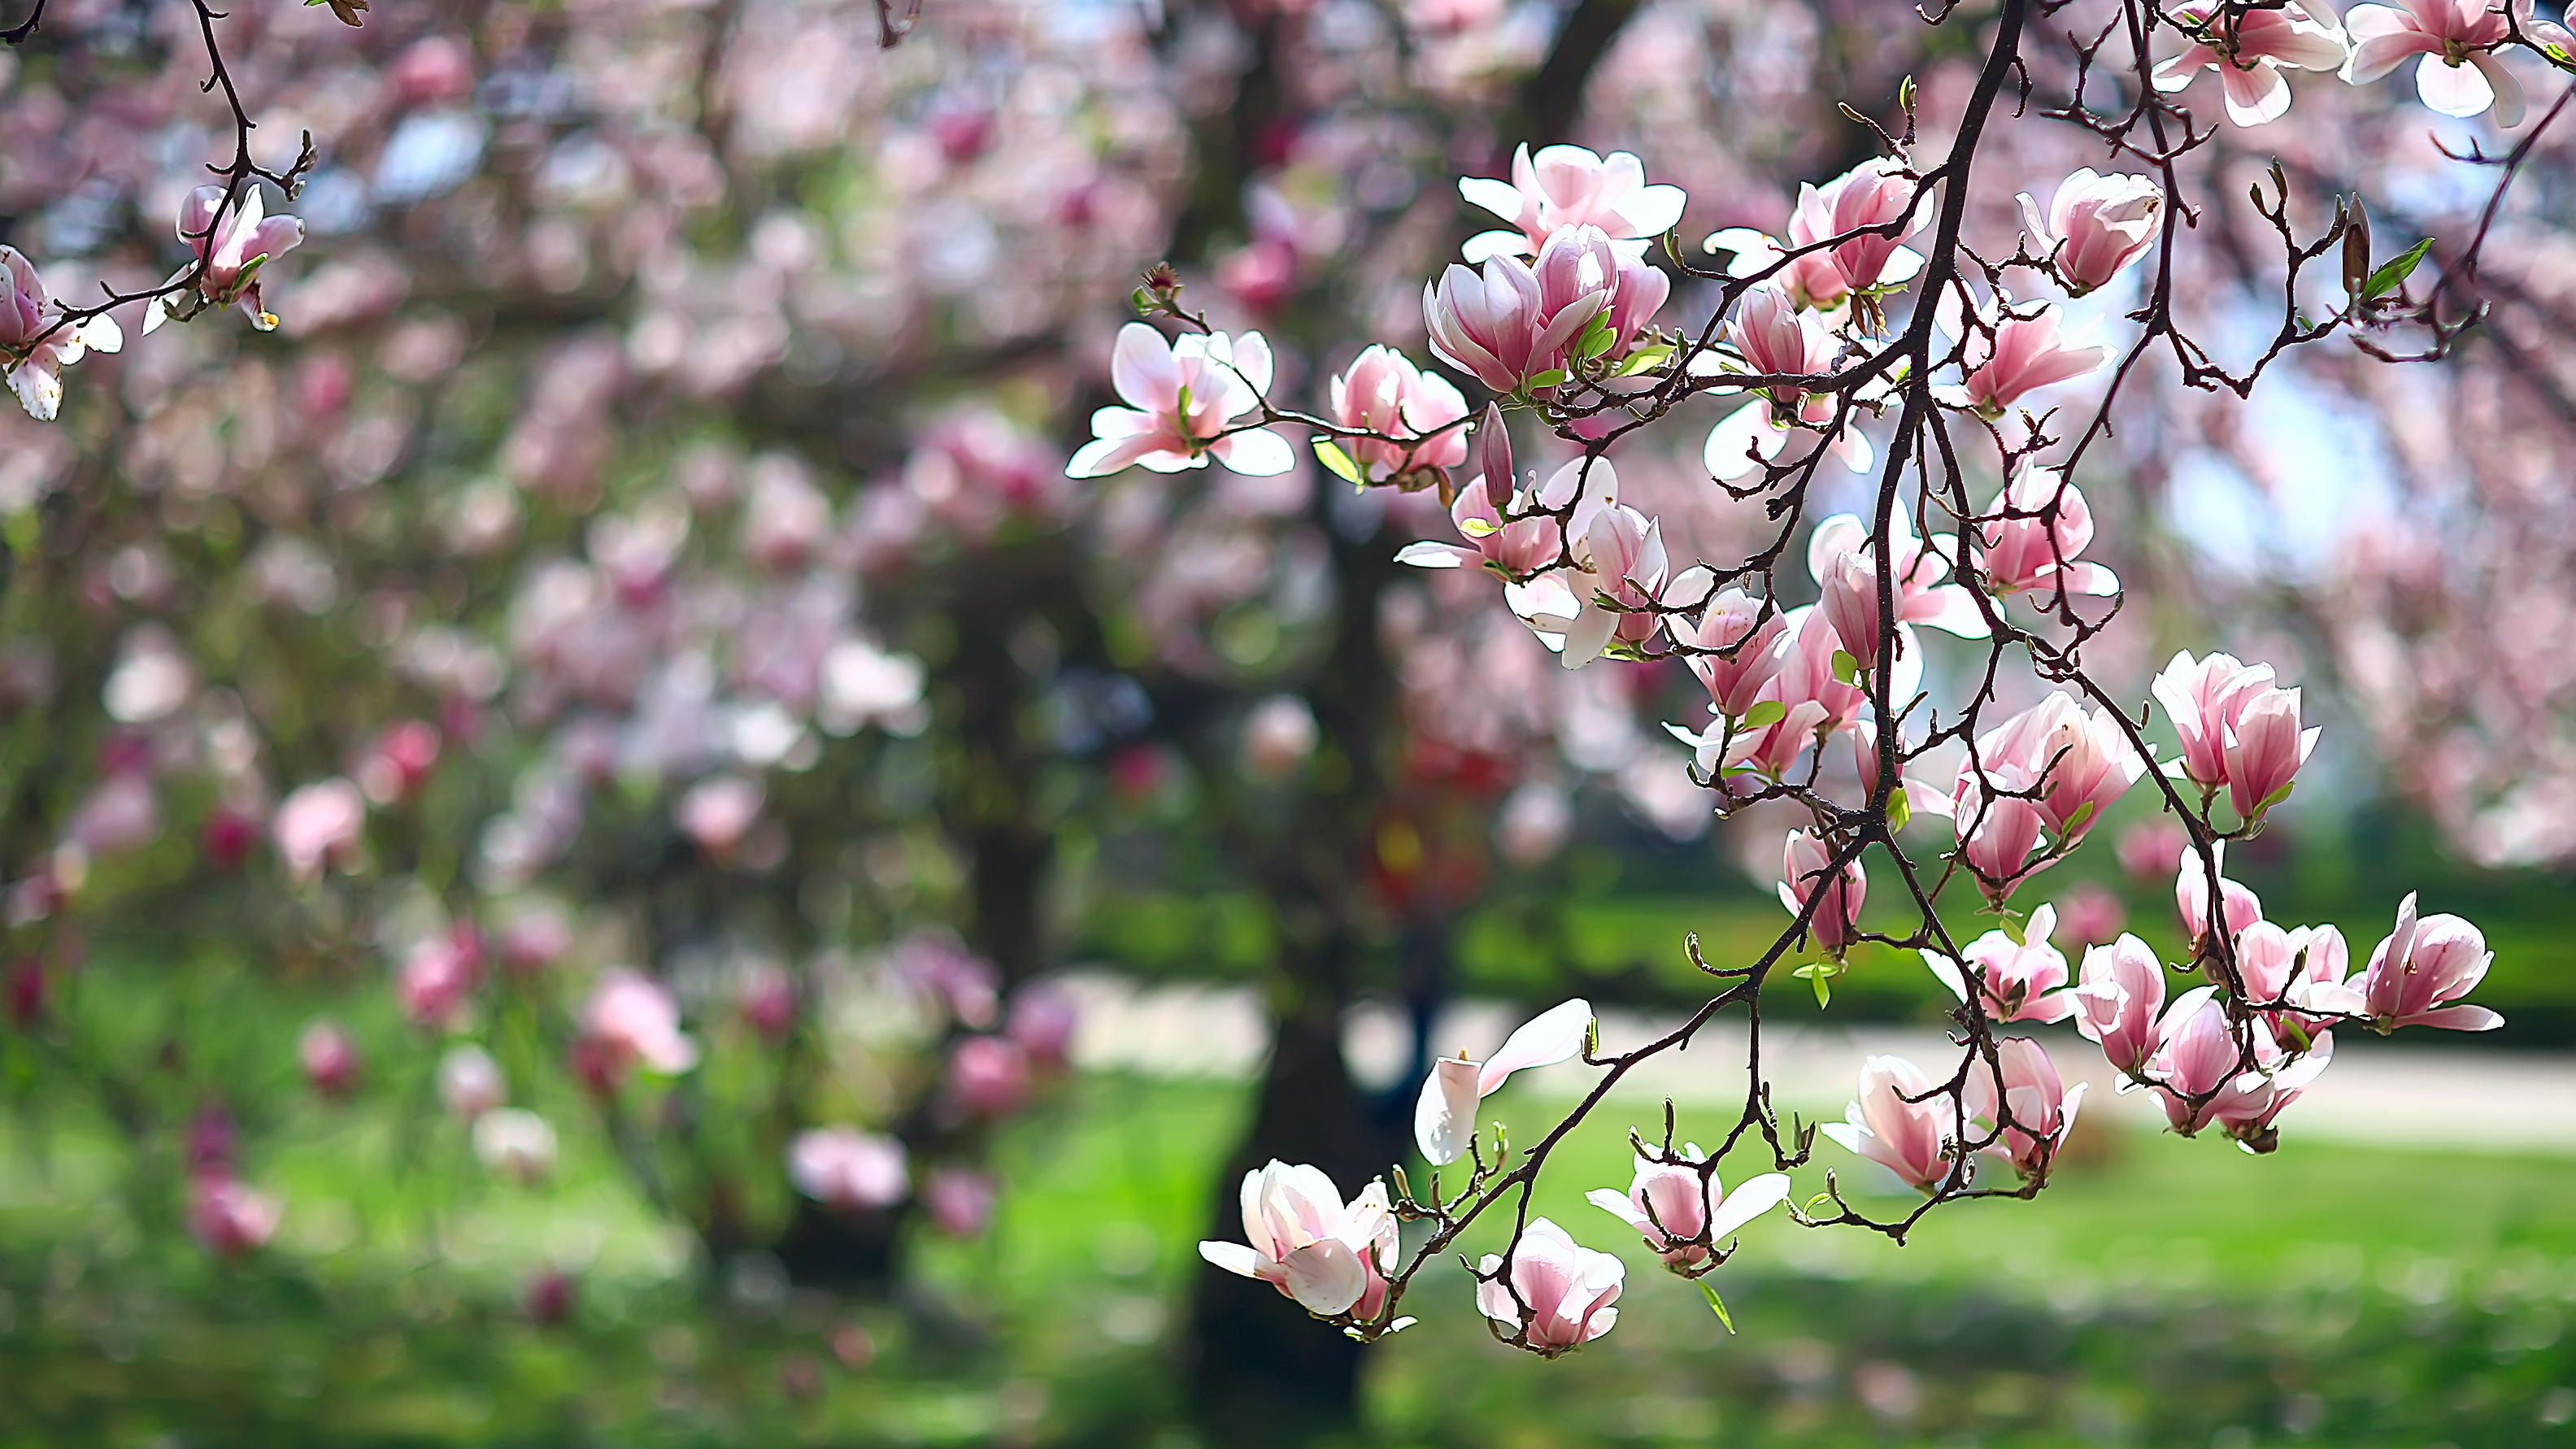 Magnolia blossom in a spring garden.